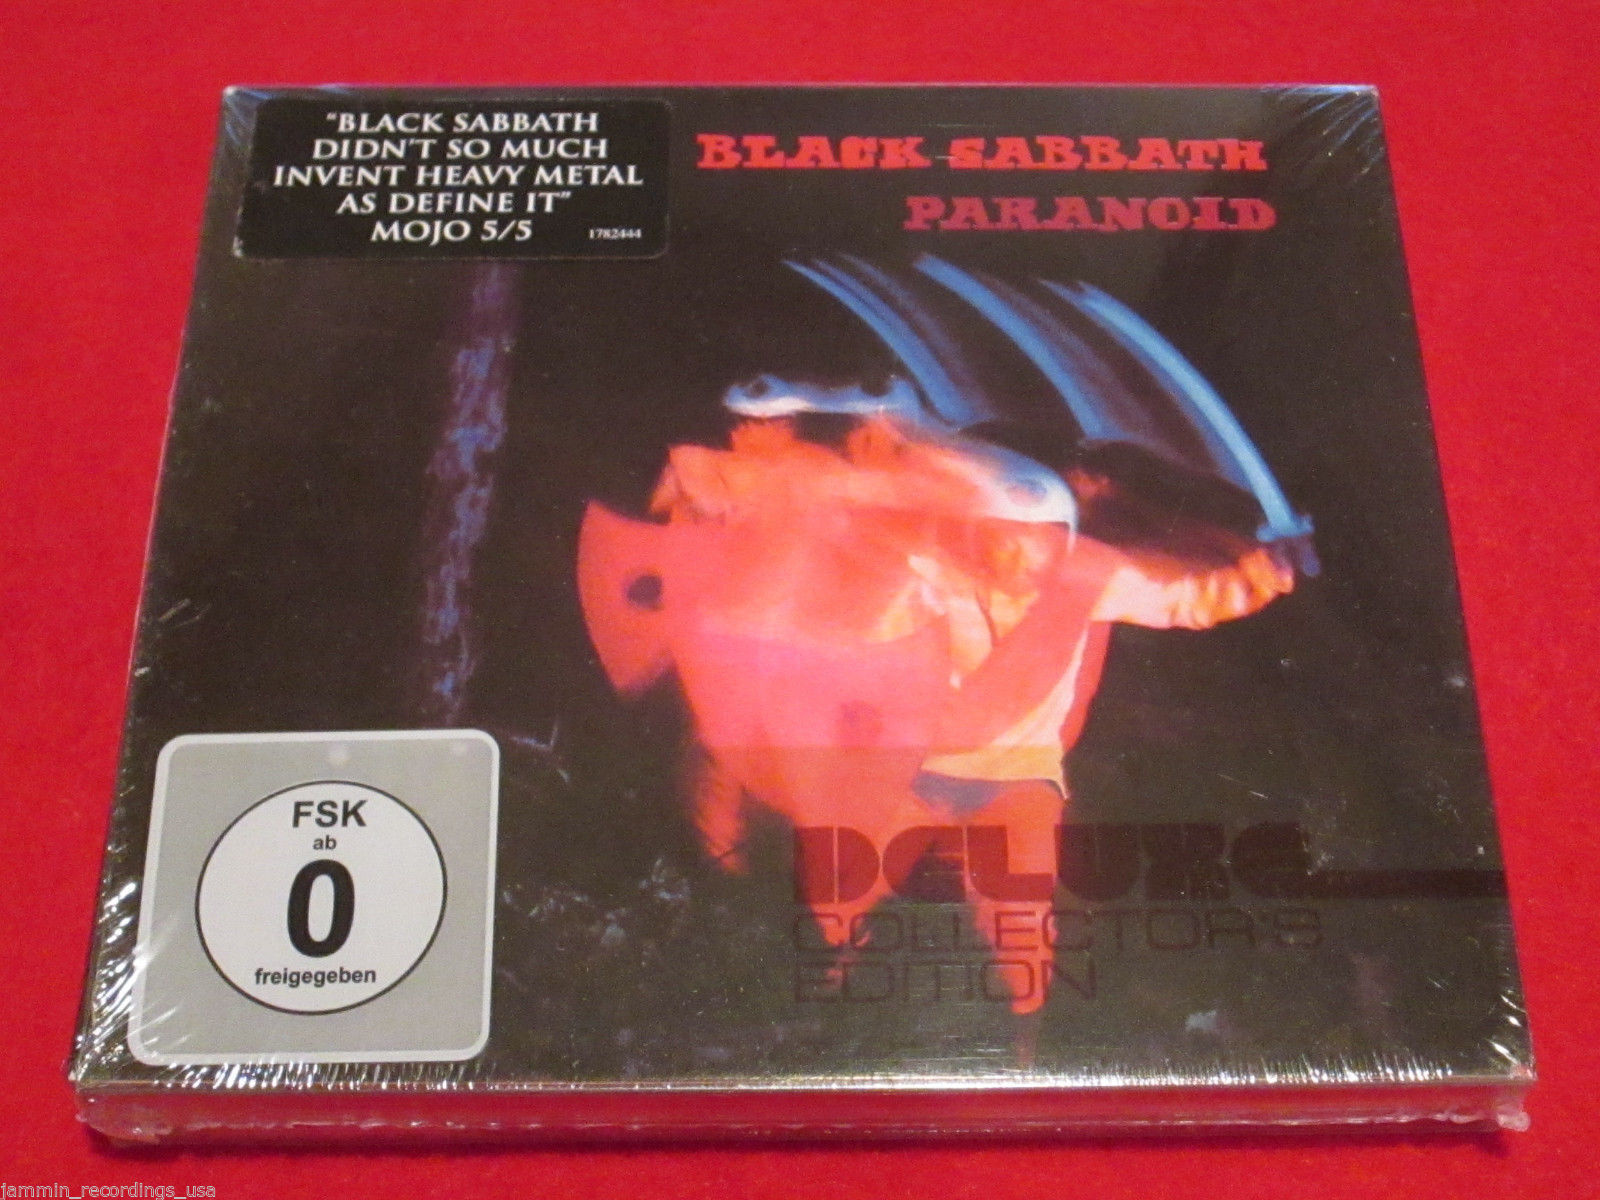 BLACK SABBATH - PARANOID [DELUXE EDITION] - NEW 2CD + DVD BOXSET - 0602517824447